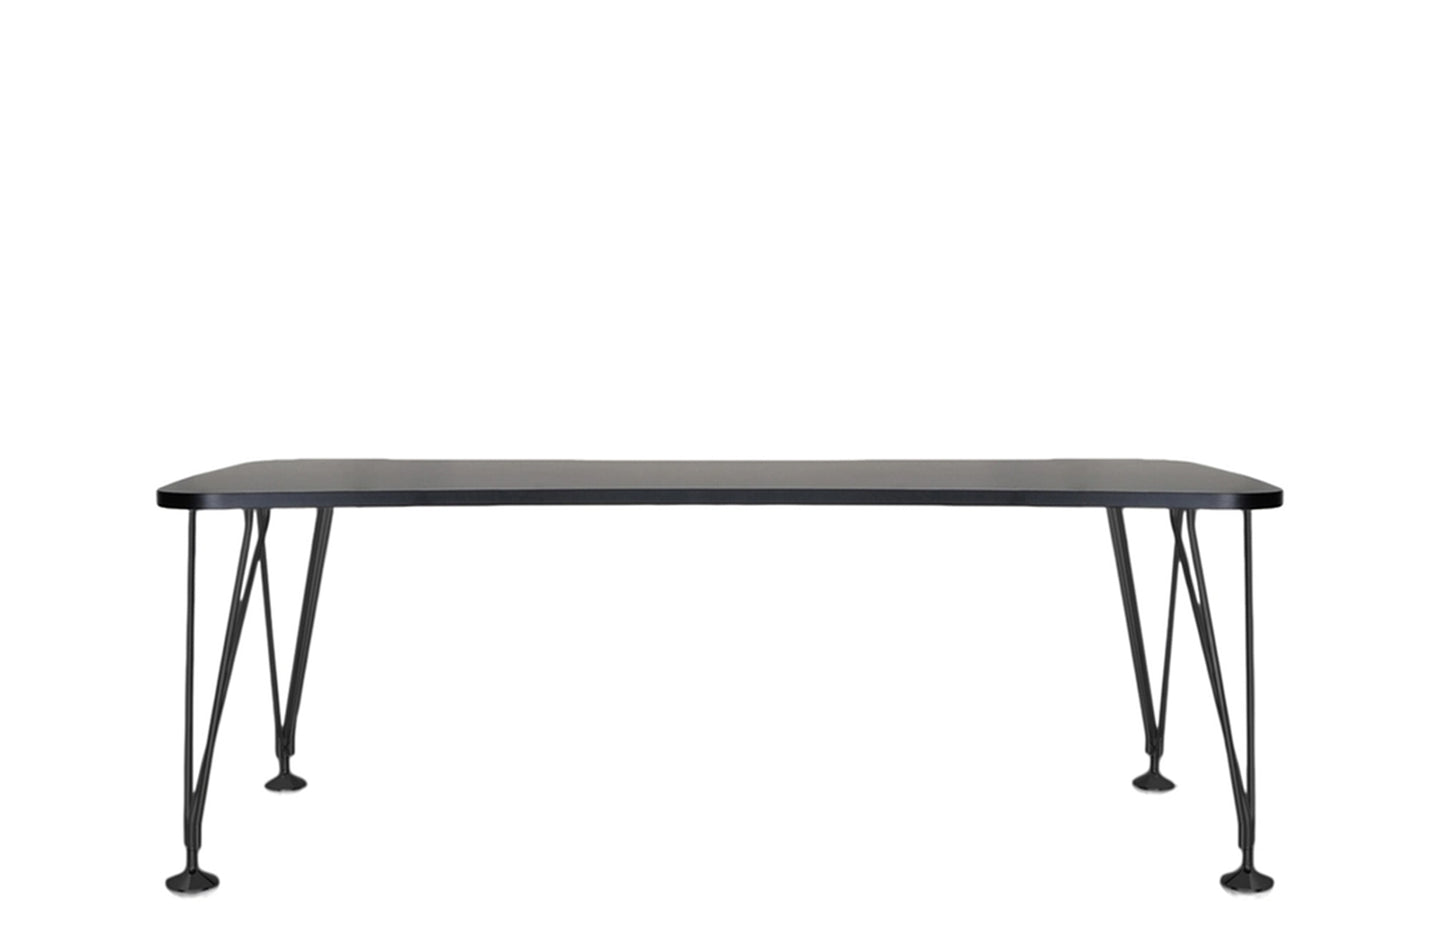 Max Medium Table
